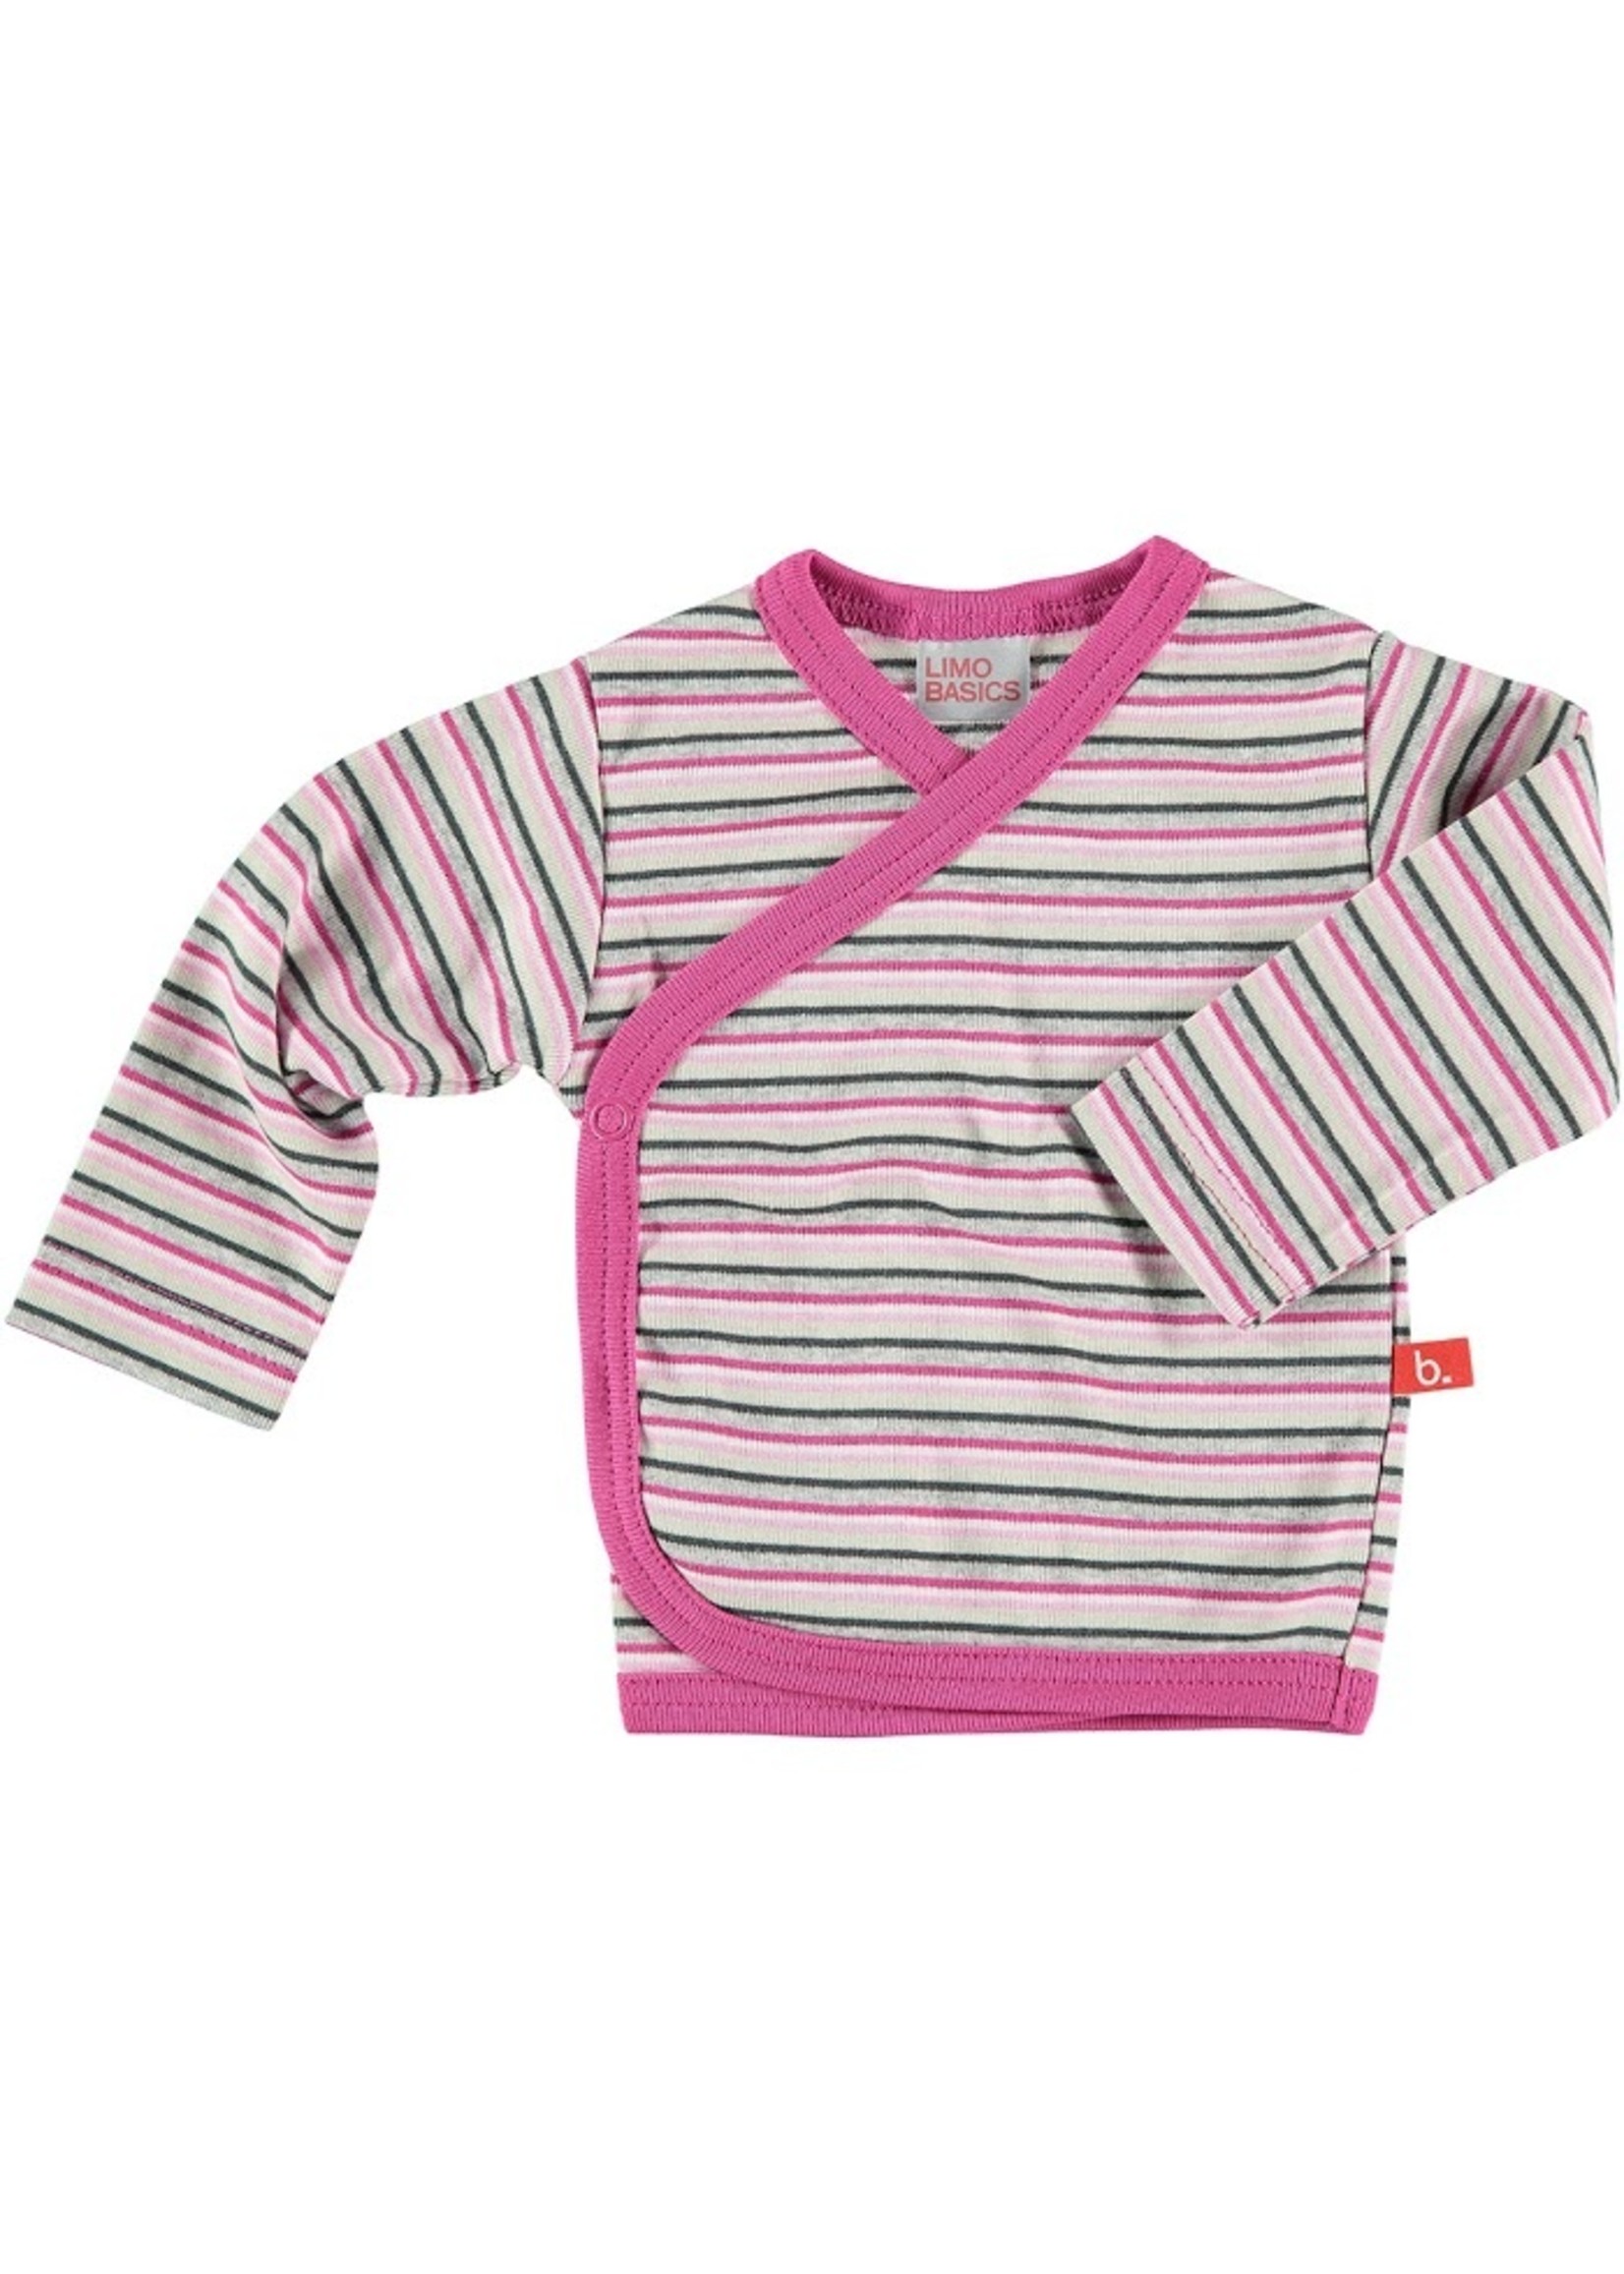 Limo basics Kimono cotton pink stripes shirt longsleeve 50cm